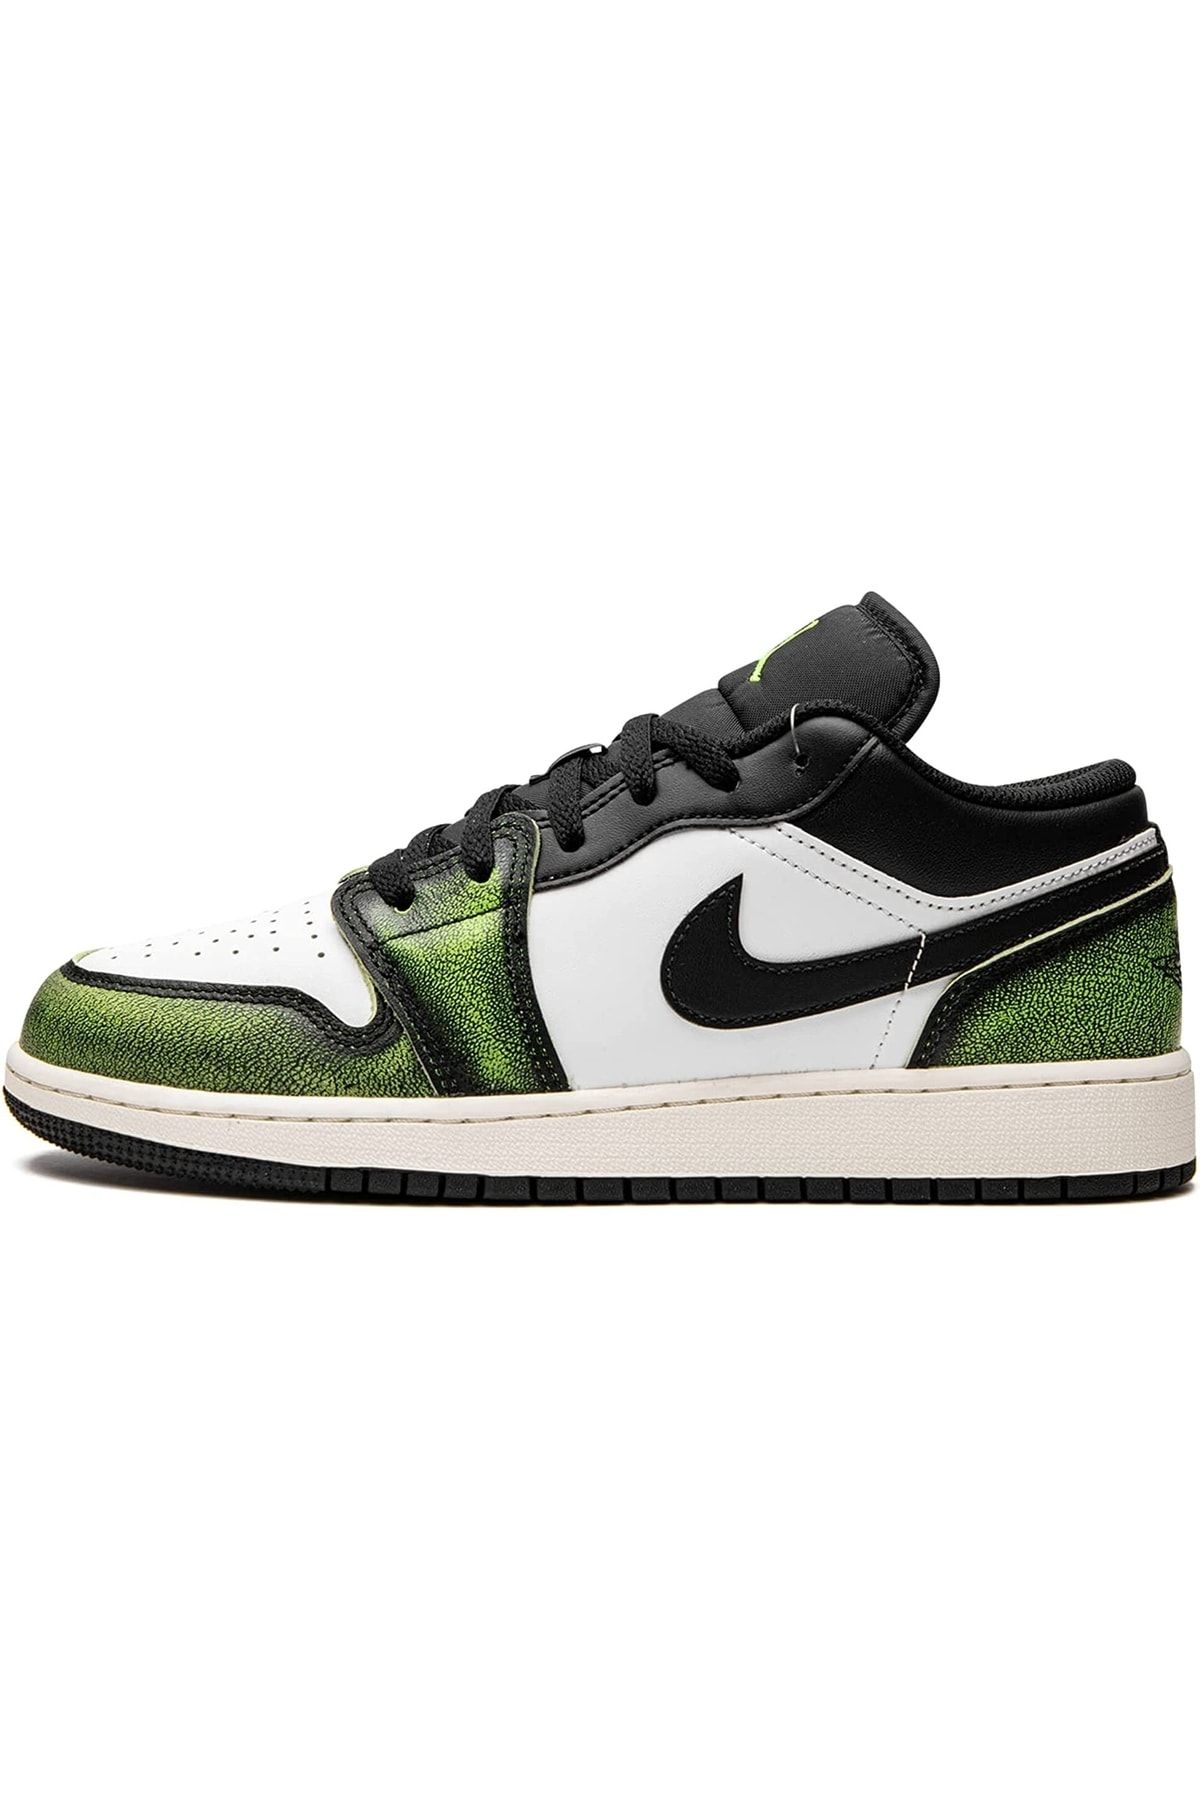 Nike Air Jordan 1 Low White Black Green Sneaker